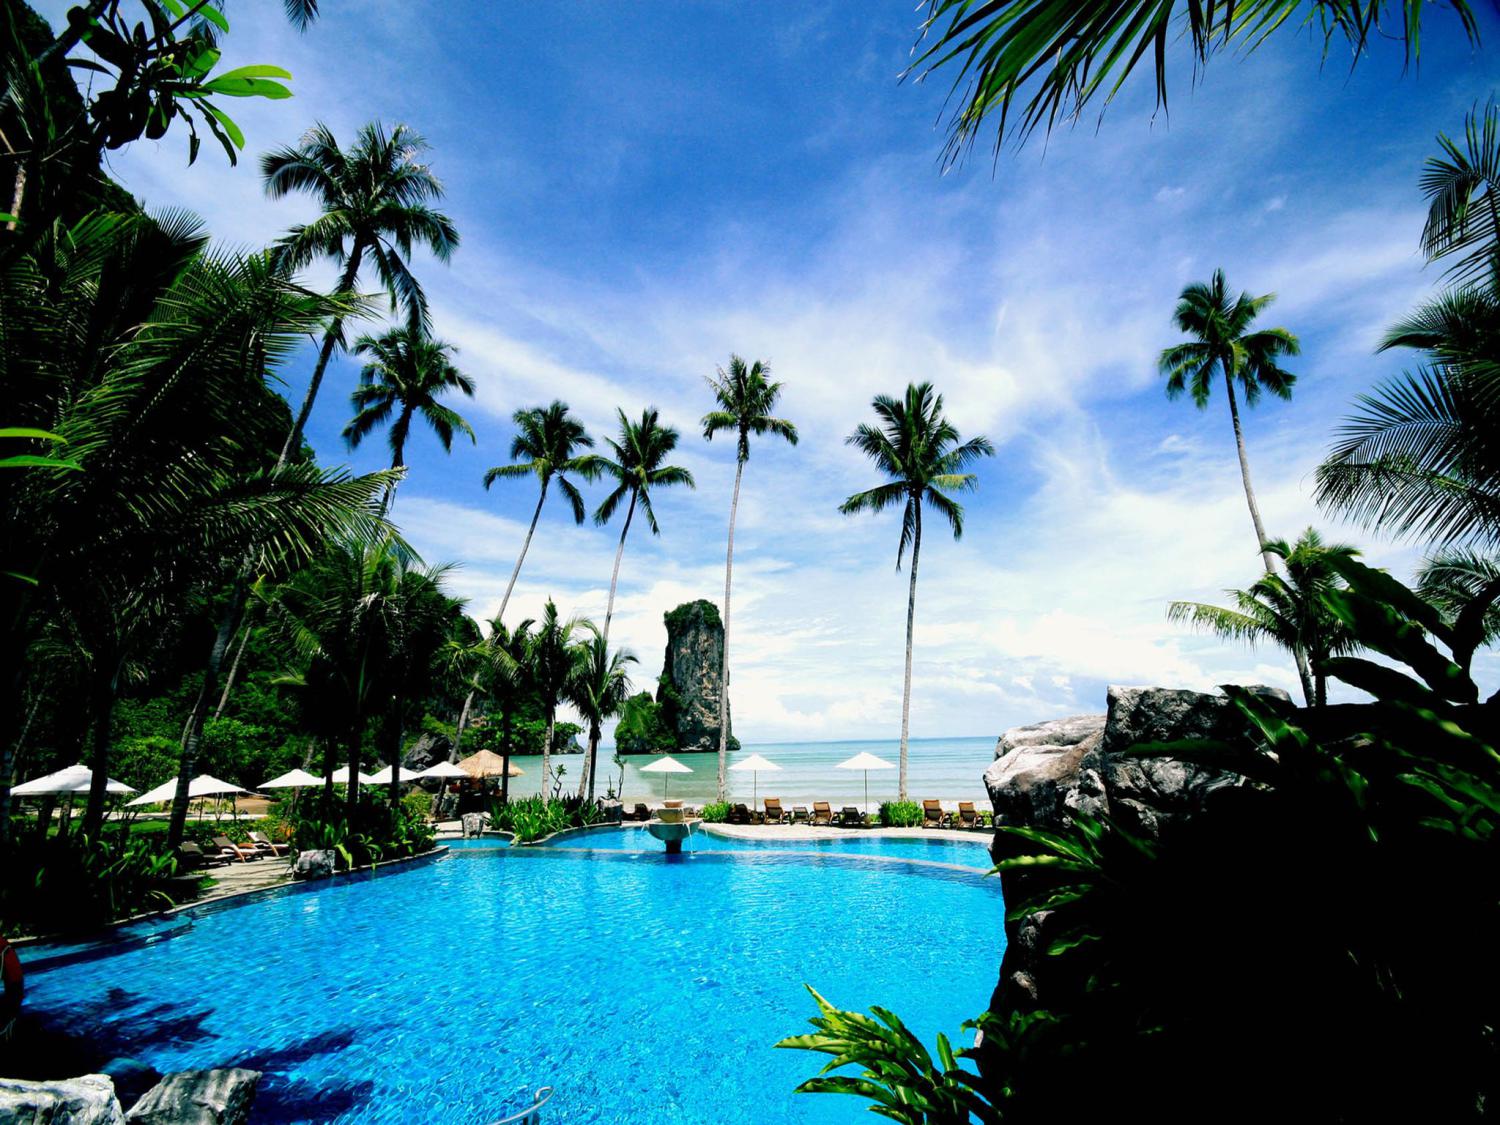 Centara Grand Beach Resort & Villas Krabi - Image 0